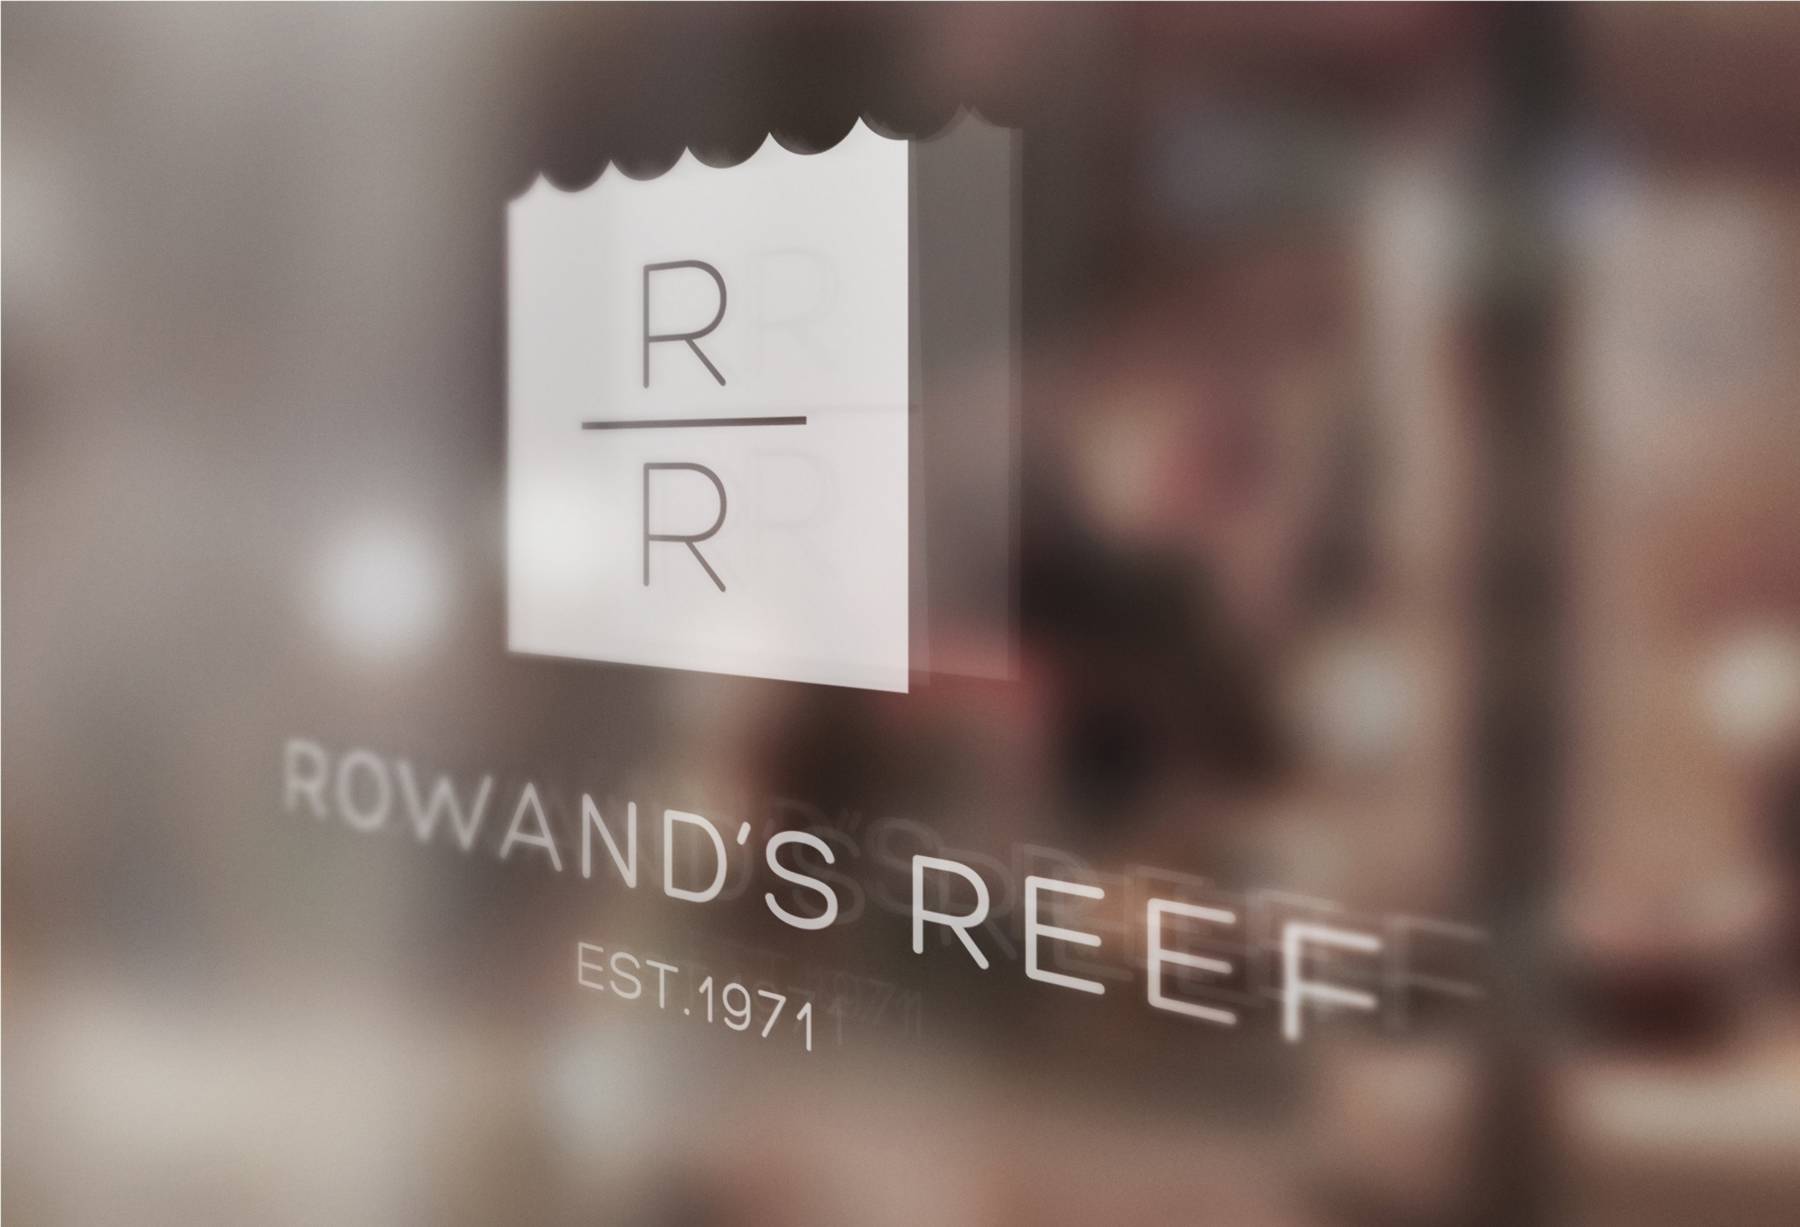 Rowands-reef-main